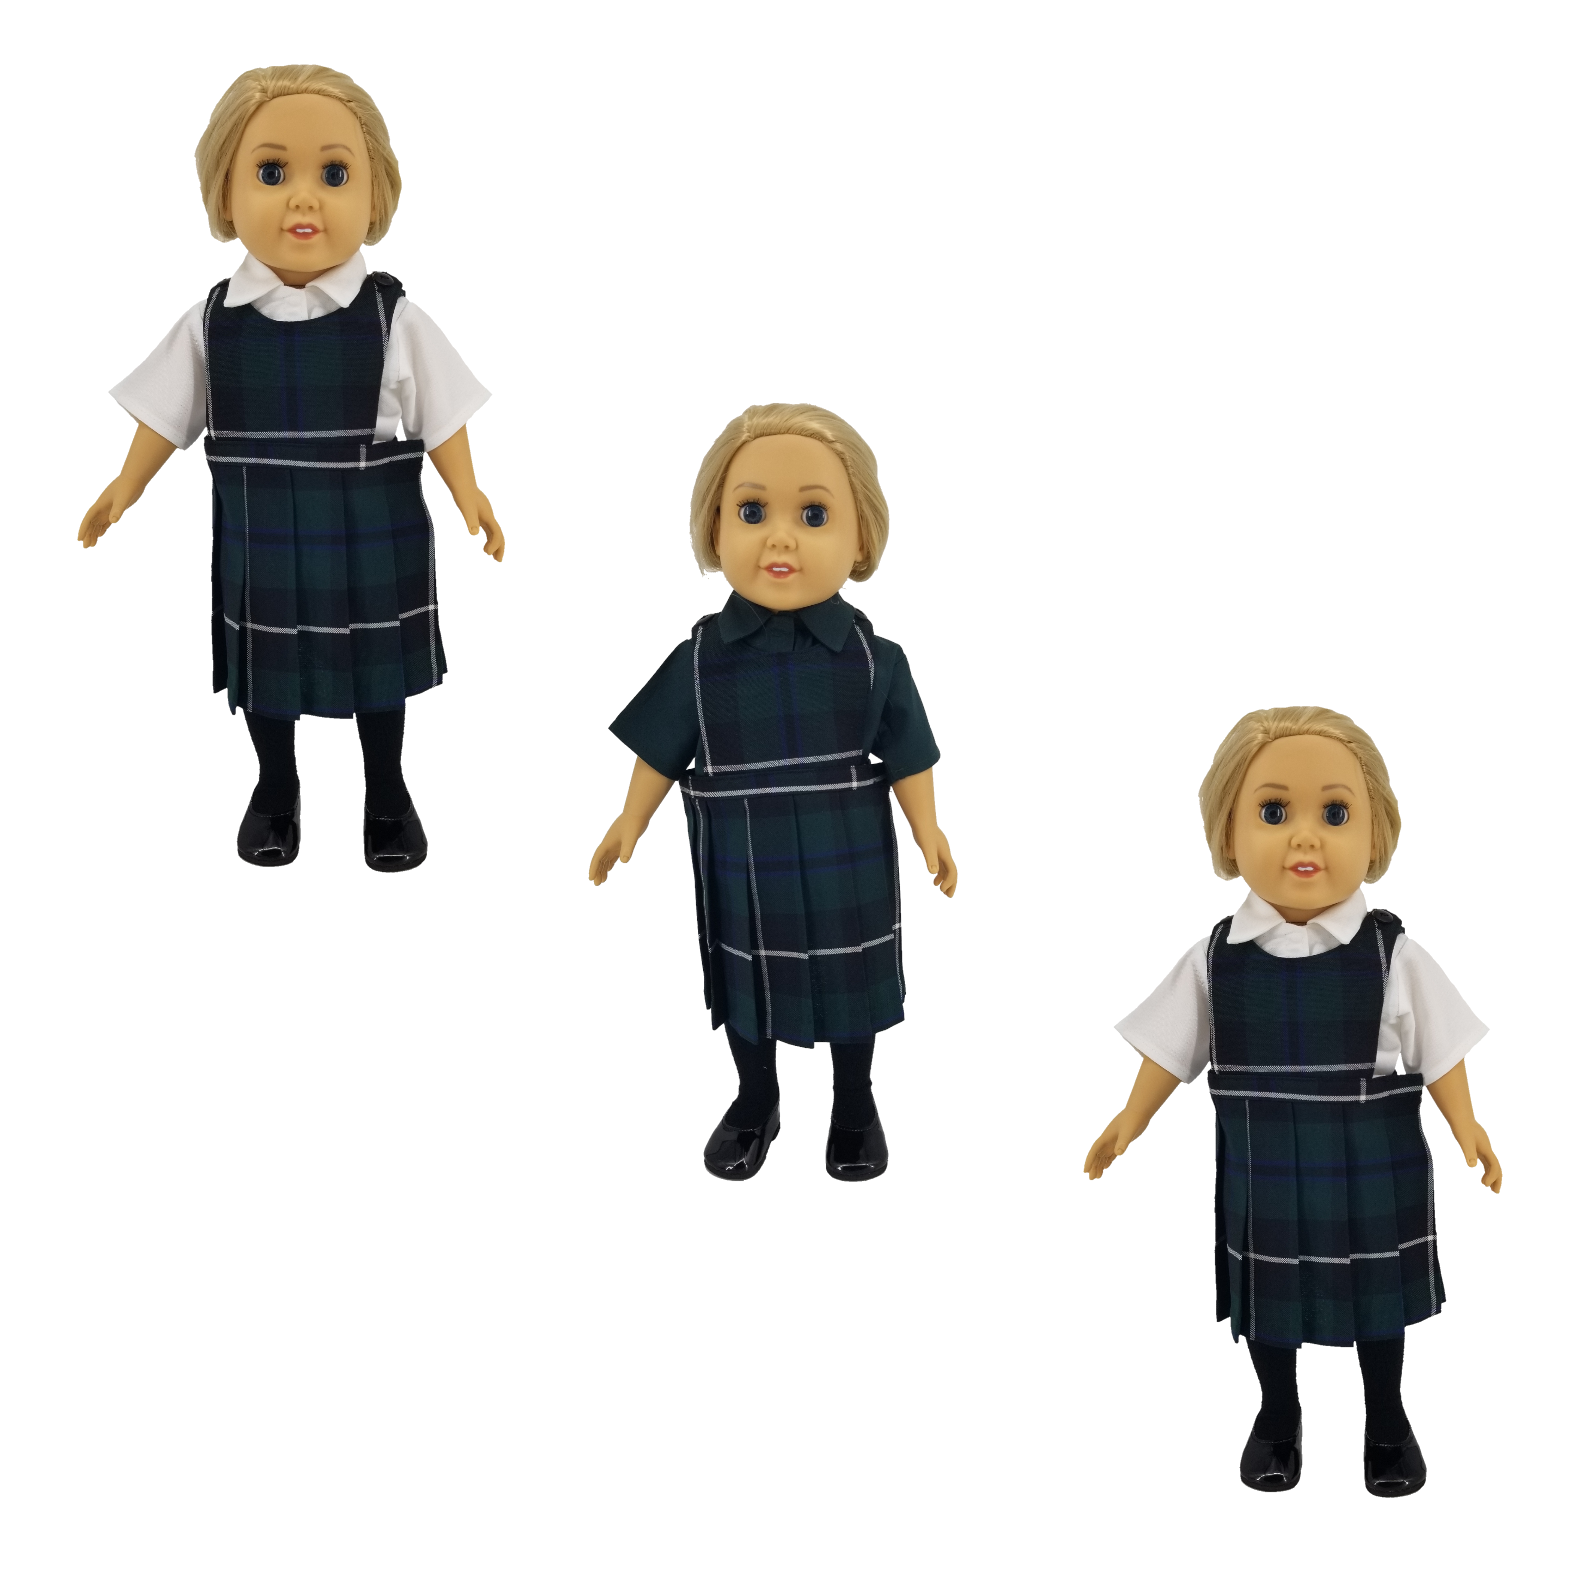 Doll Uniform